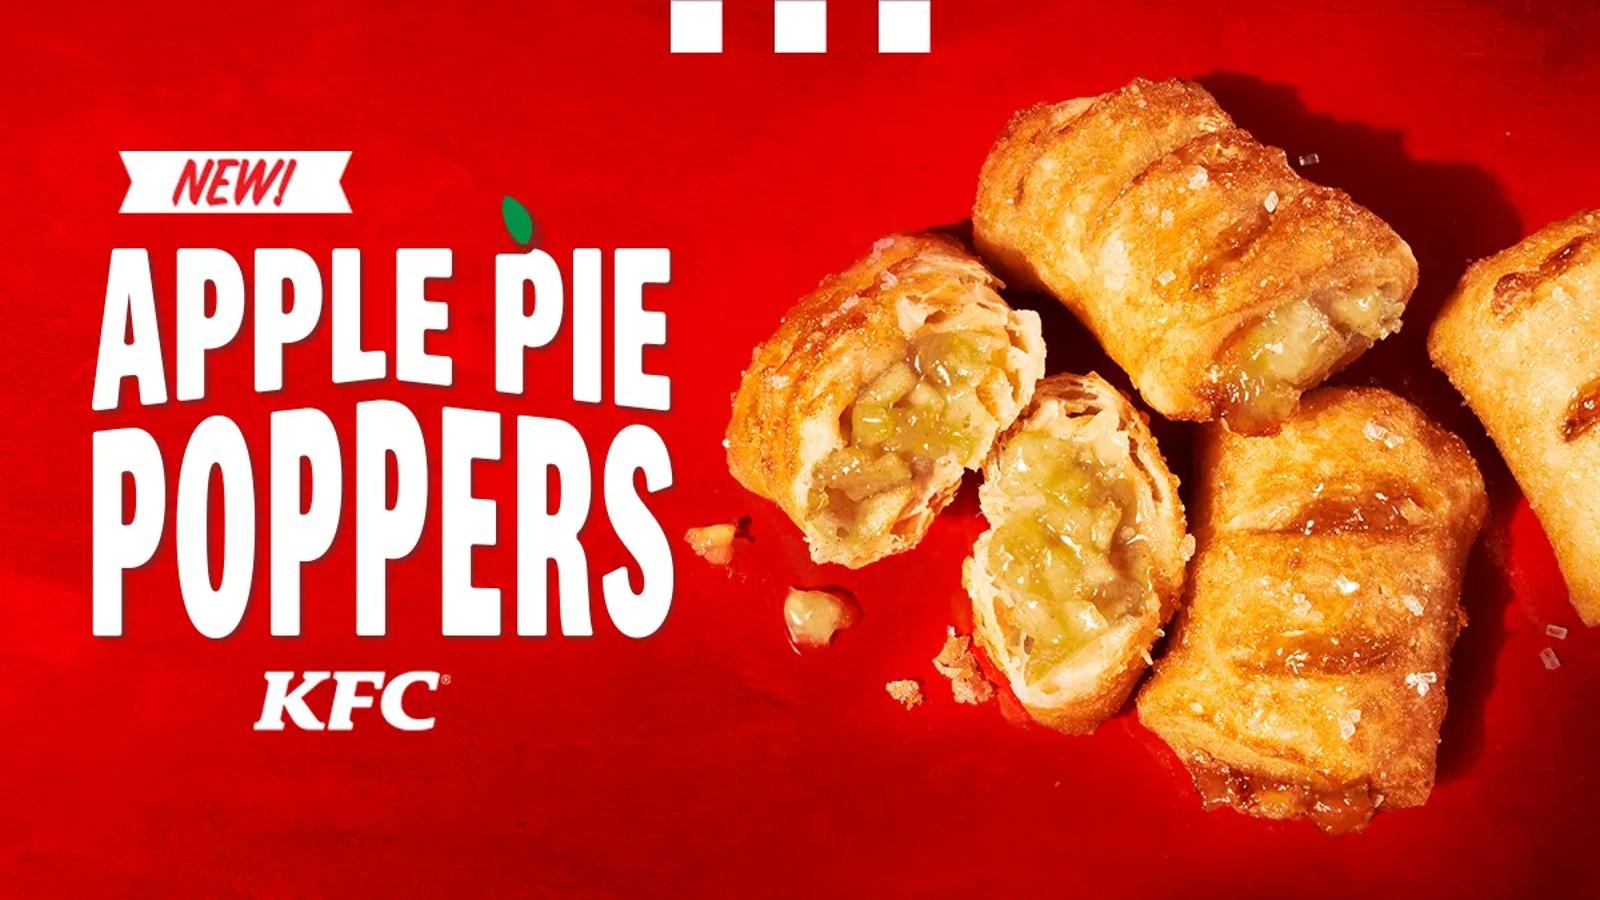 KFC apple pie poppers